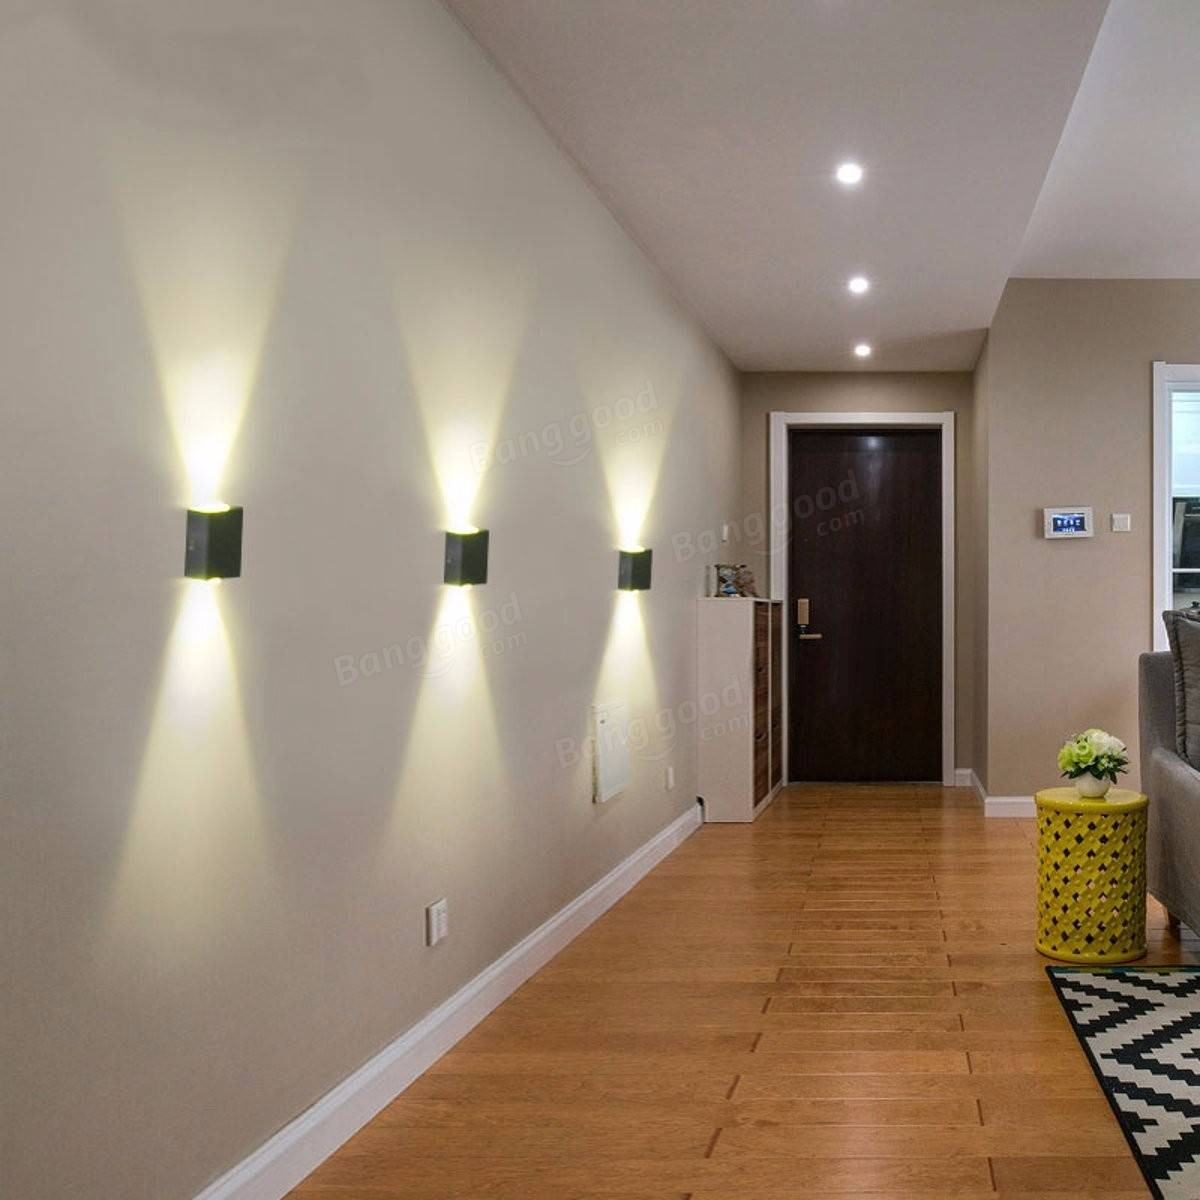 Wall Lights Bedroom
 Aluminum 2W Modern LED Wall Light Up Down Sconce Lighting